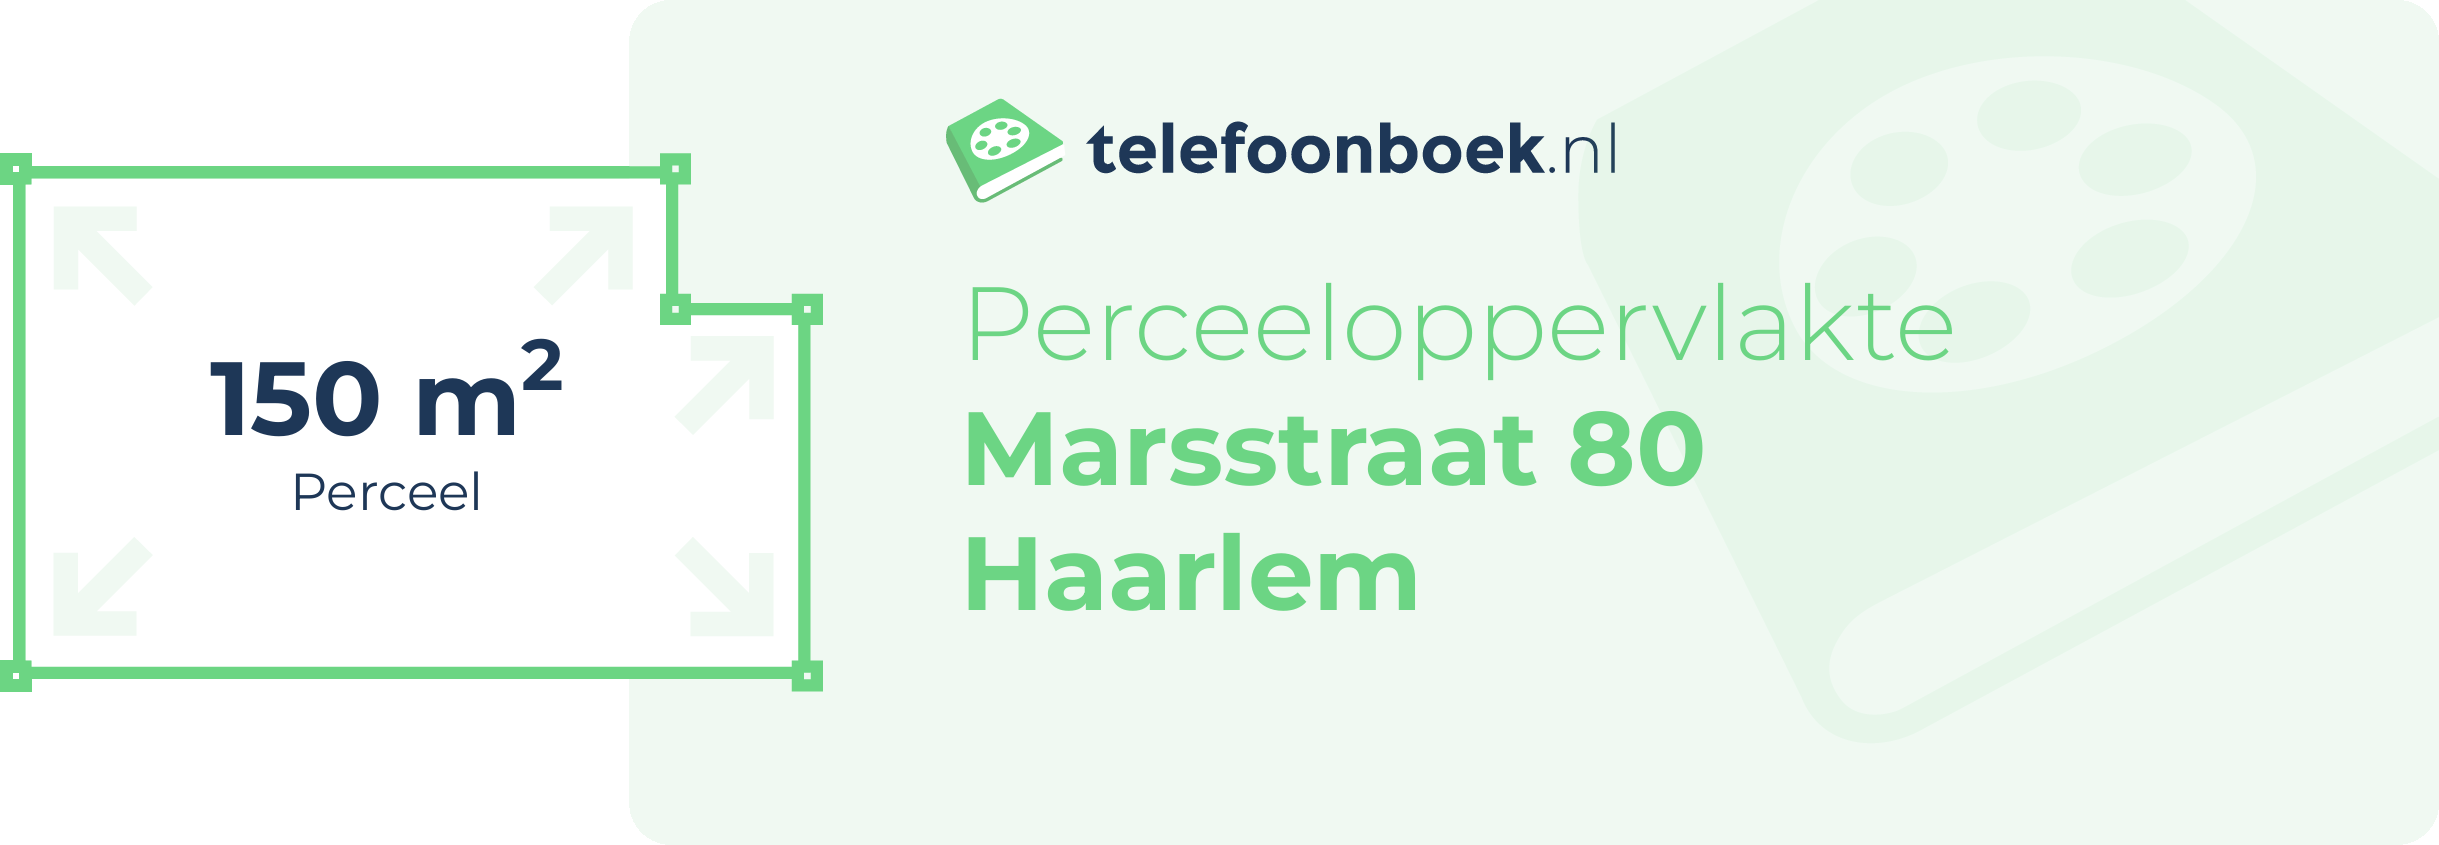 Perceeloppervlakte Marsstraat 80 Haarlem